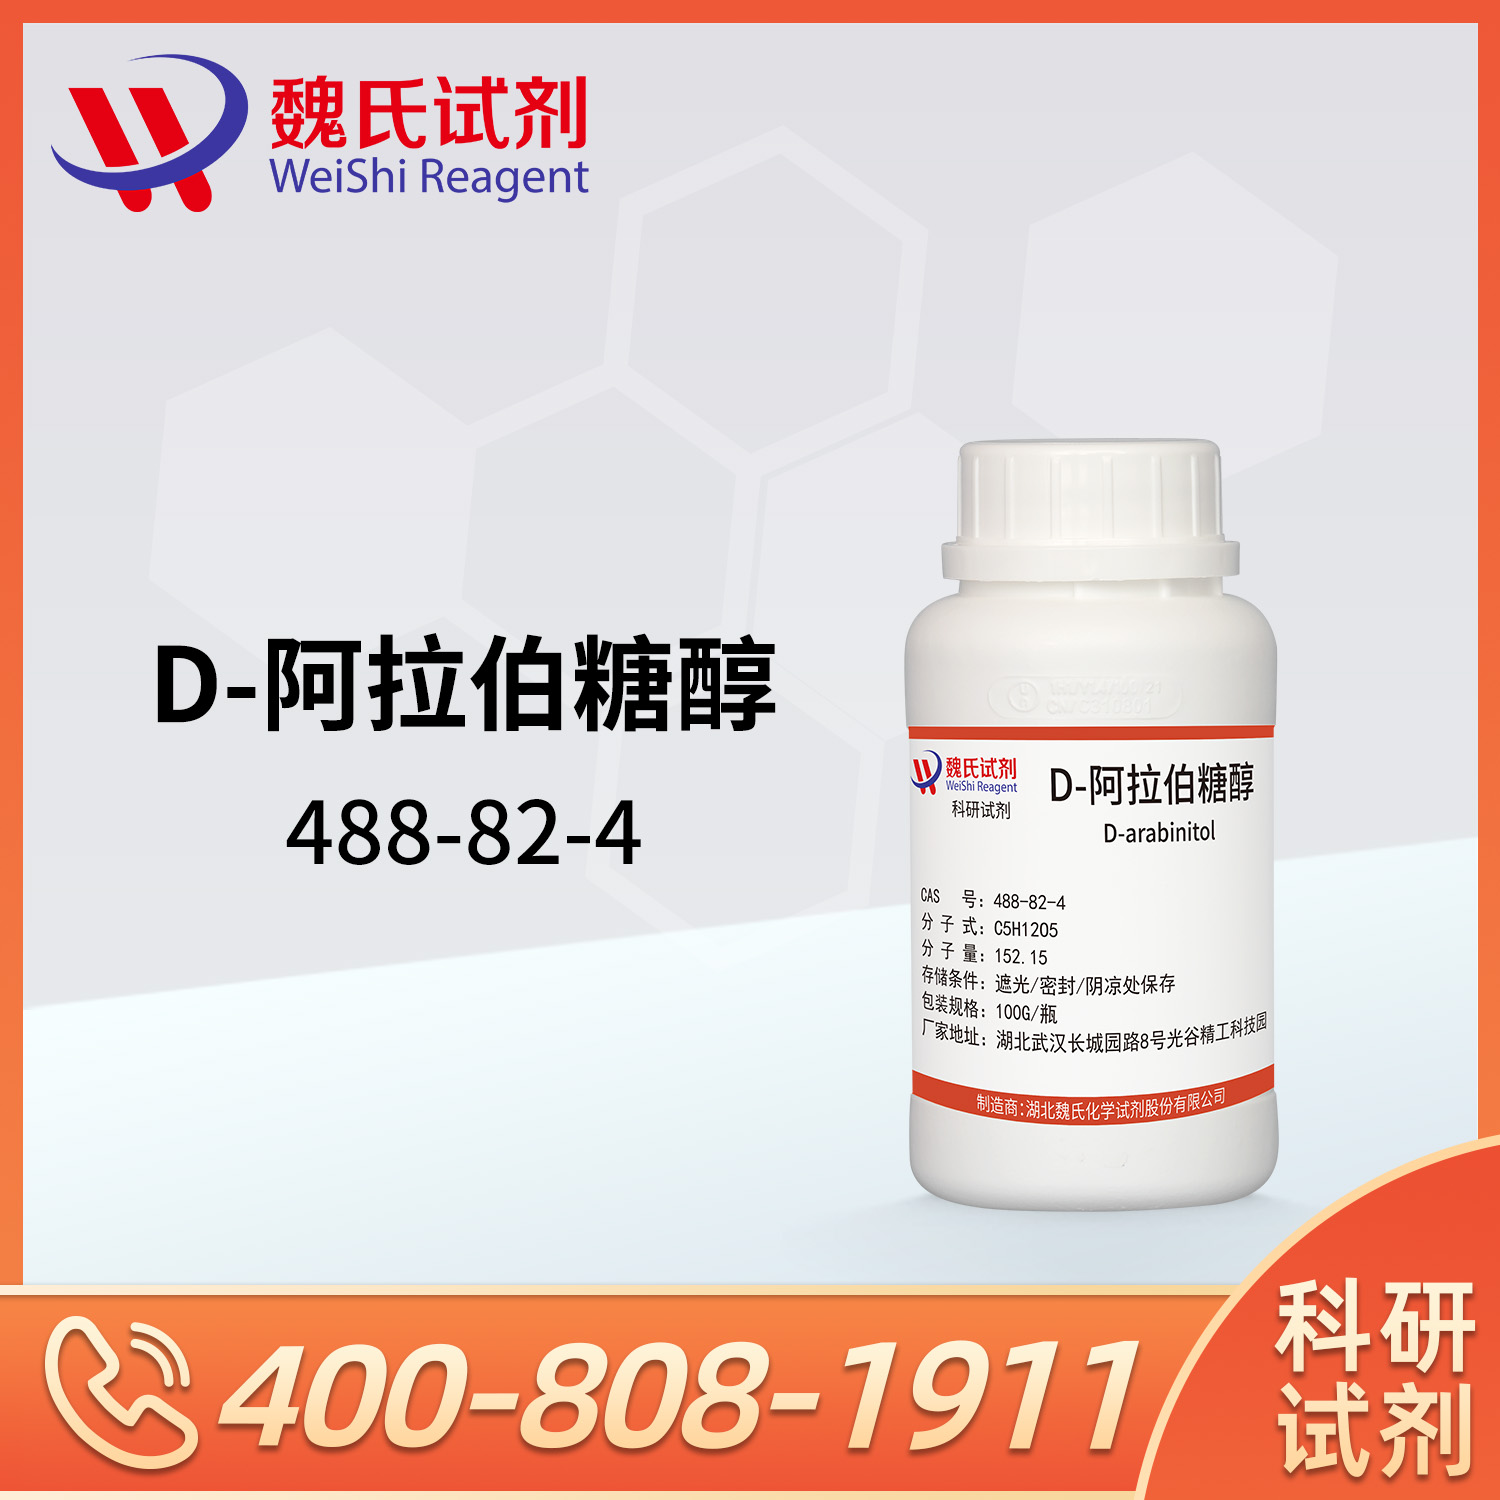 DL-阿拉伯糖醇；L-阿糖醇